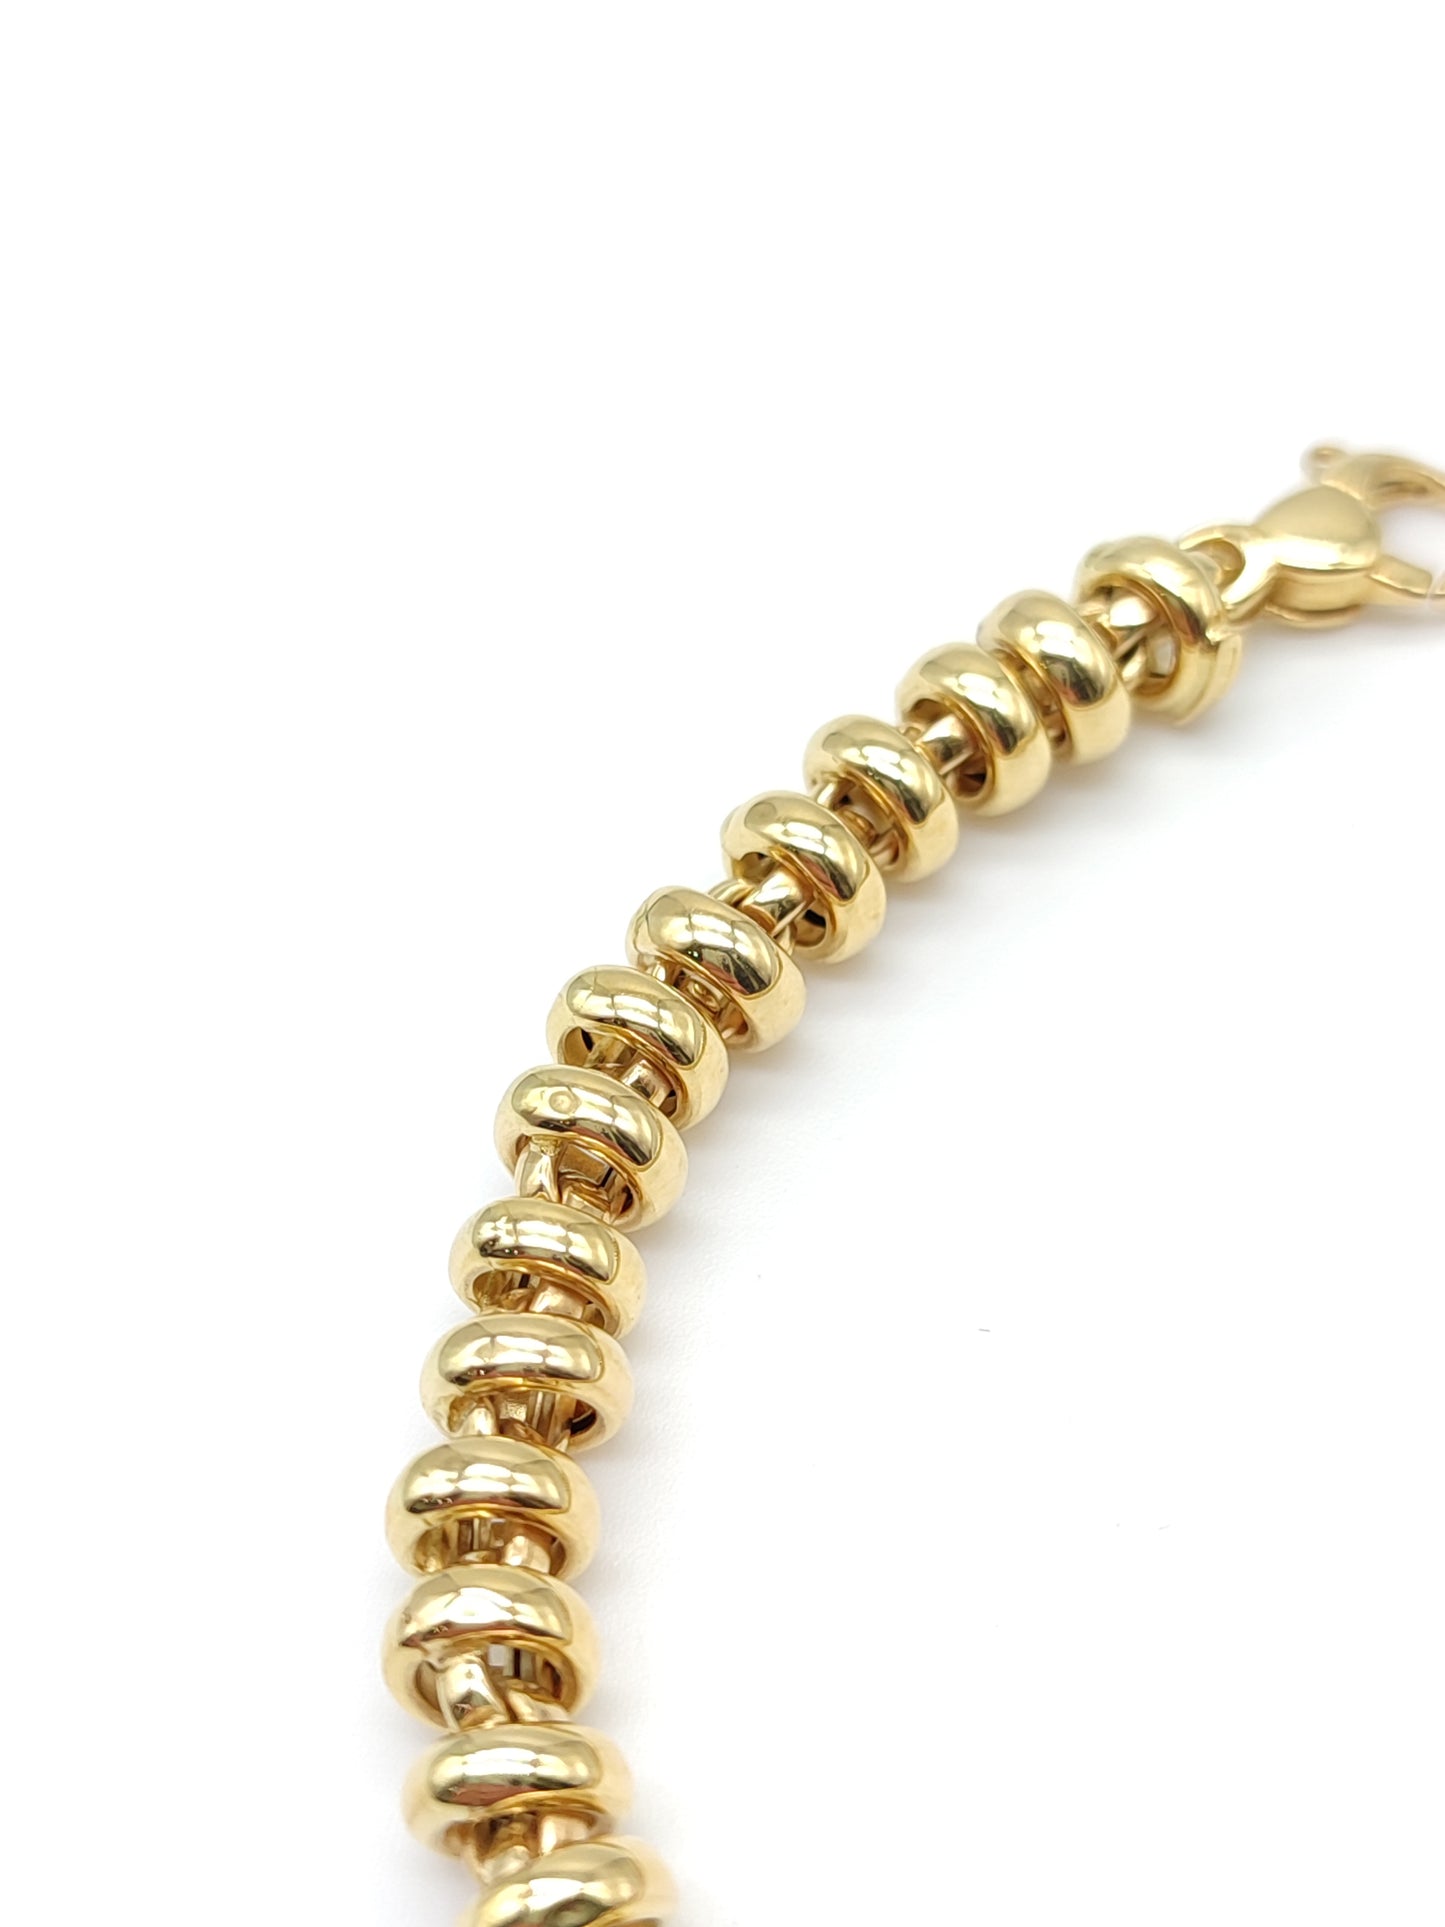 Rolo gold bracelet